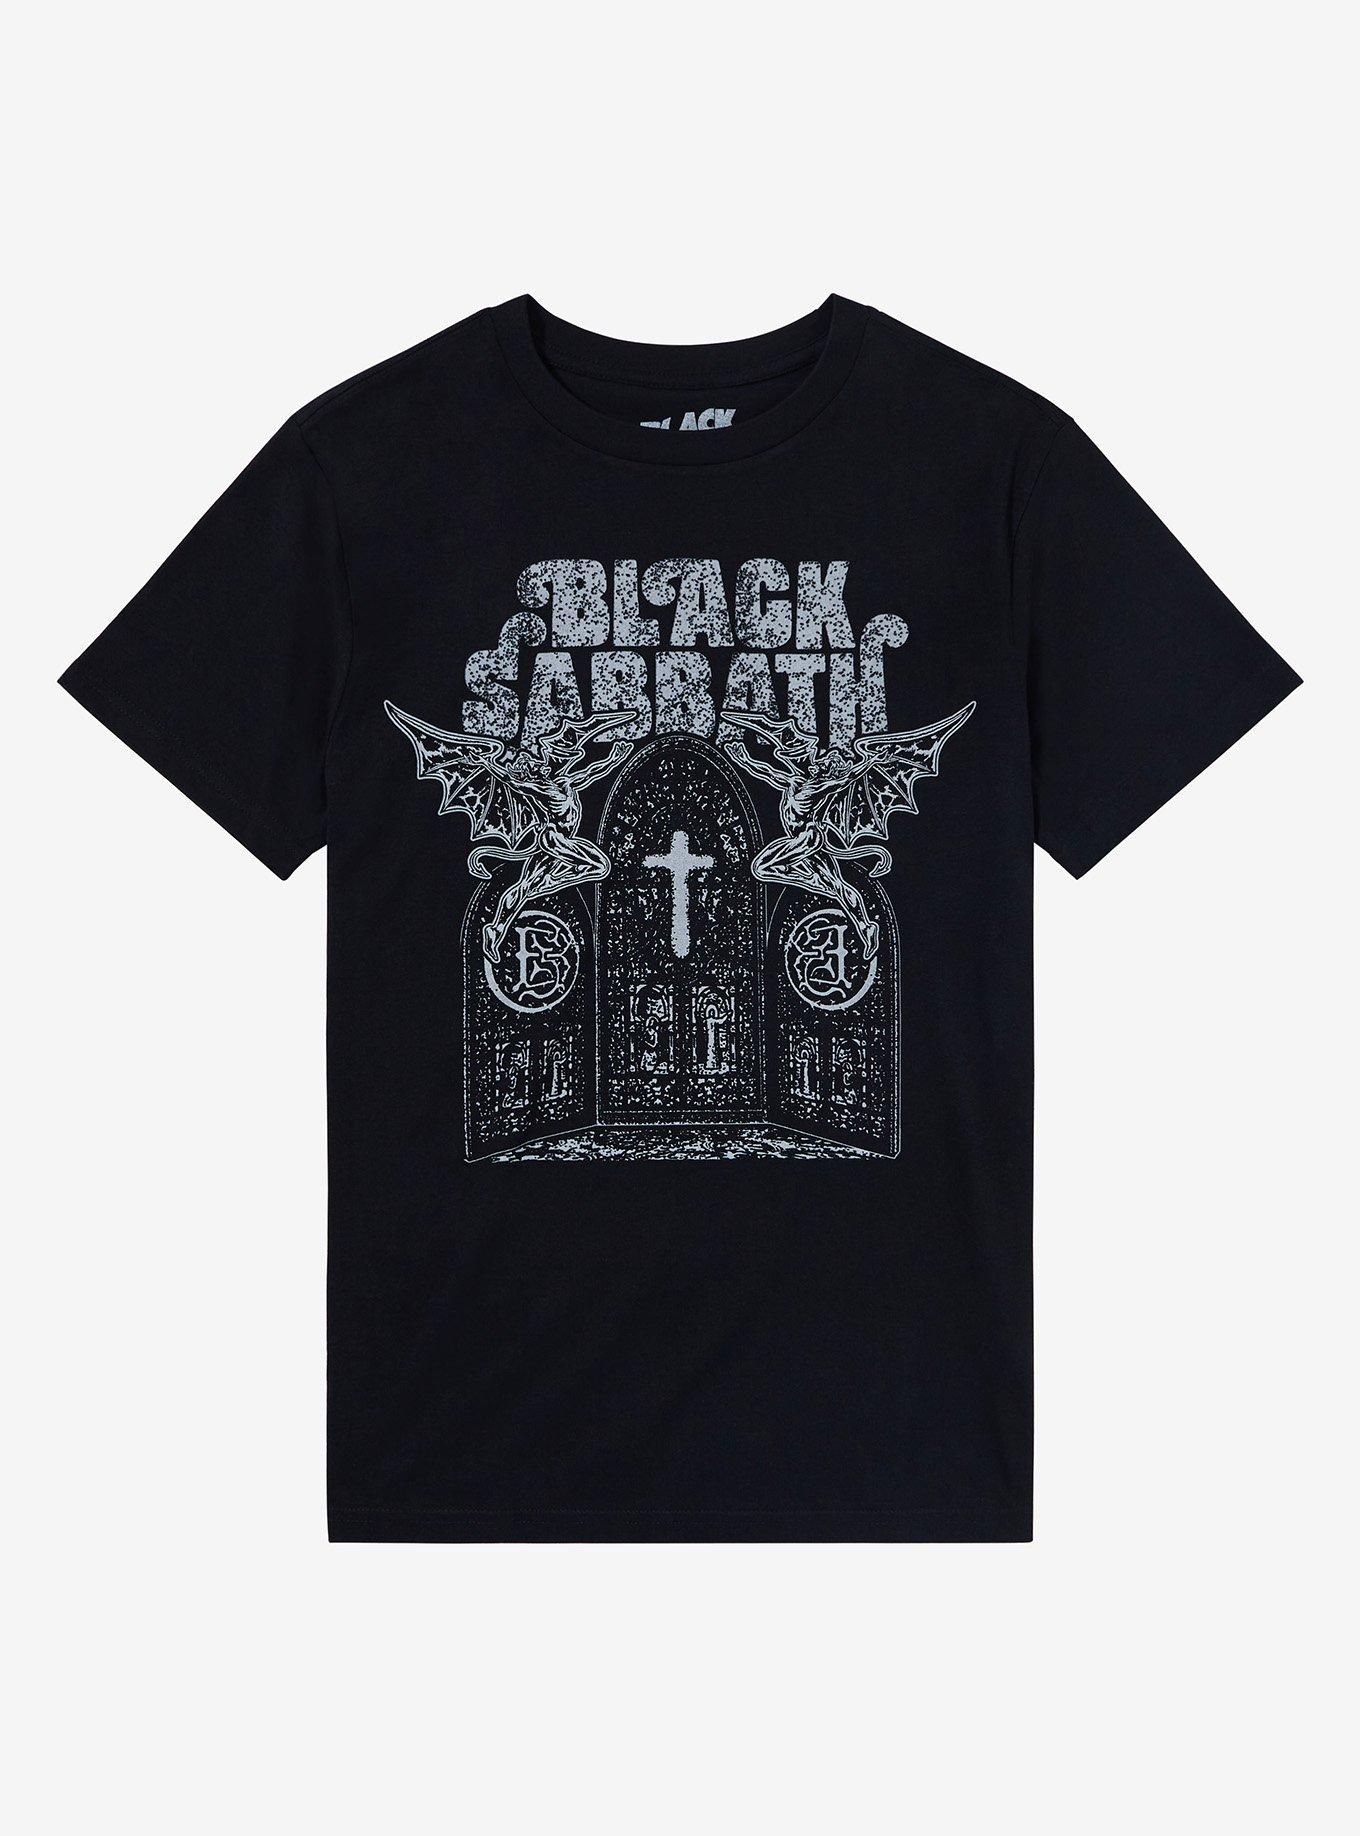 Black Sabbath Cathedral Windows Boyfriend Fit Girls T-Shirt, BLACK, hi-res